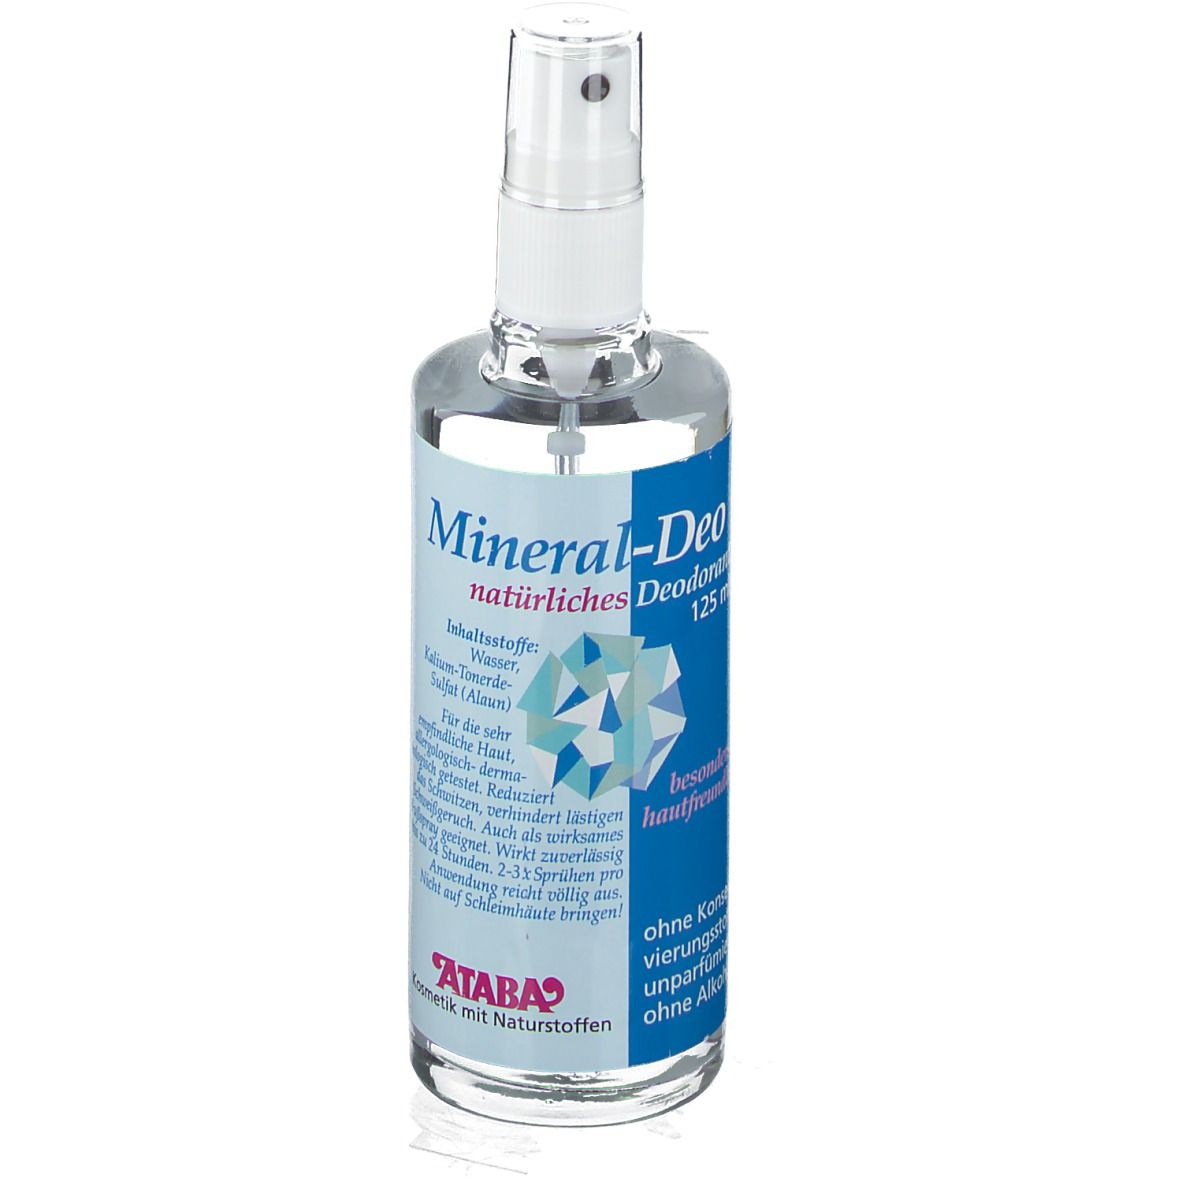 Ataba Mineral-Deo natürliches Deodorante